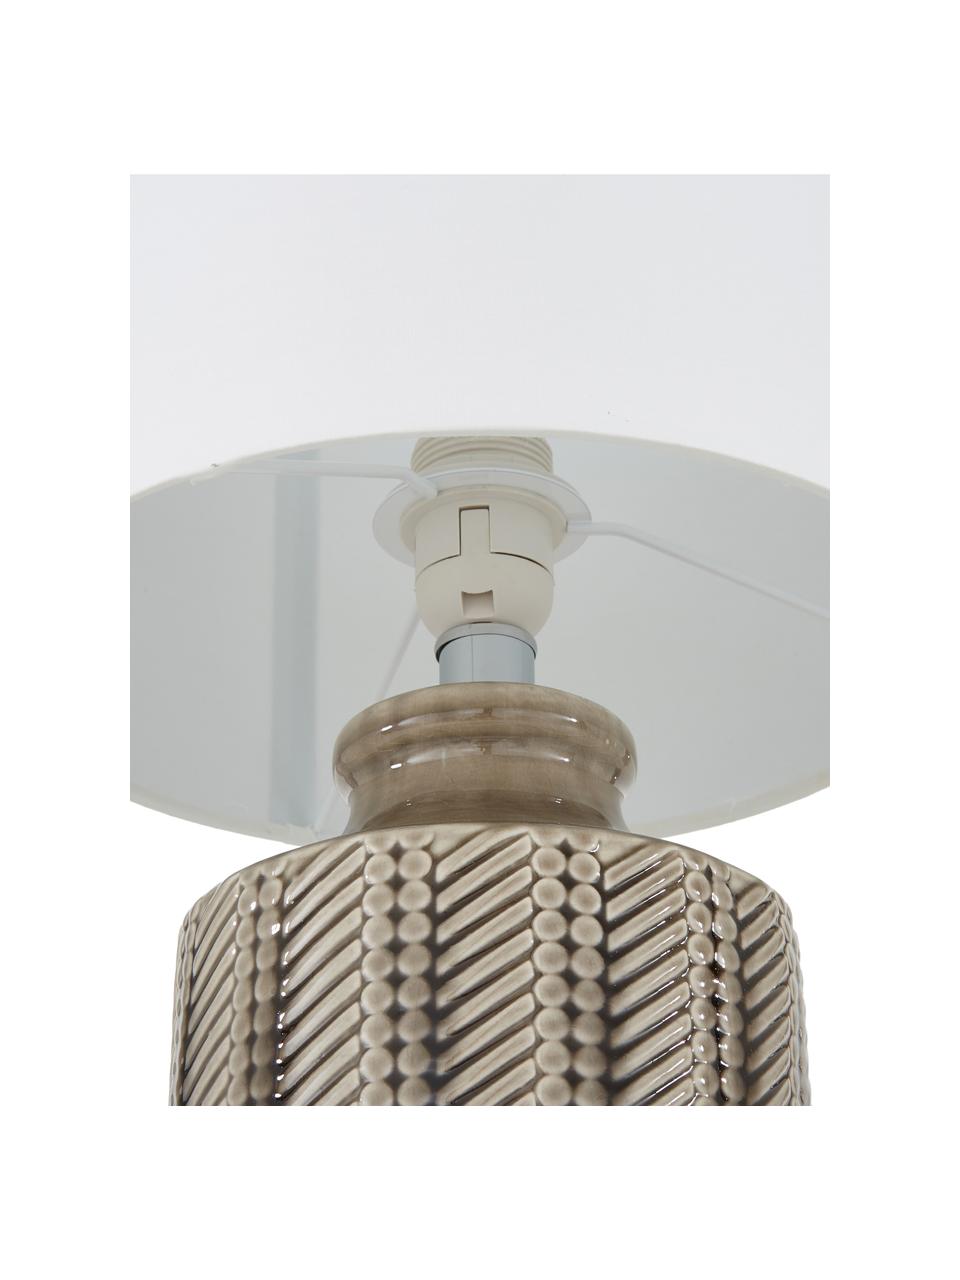 Keramik-Tischlampe Nia, Lampenschirm: Textil, Lampenschirm: WeissLampenfuss: Braun, Nickel, Ø 26 x H 43 cm